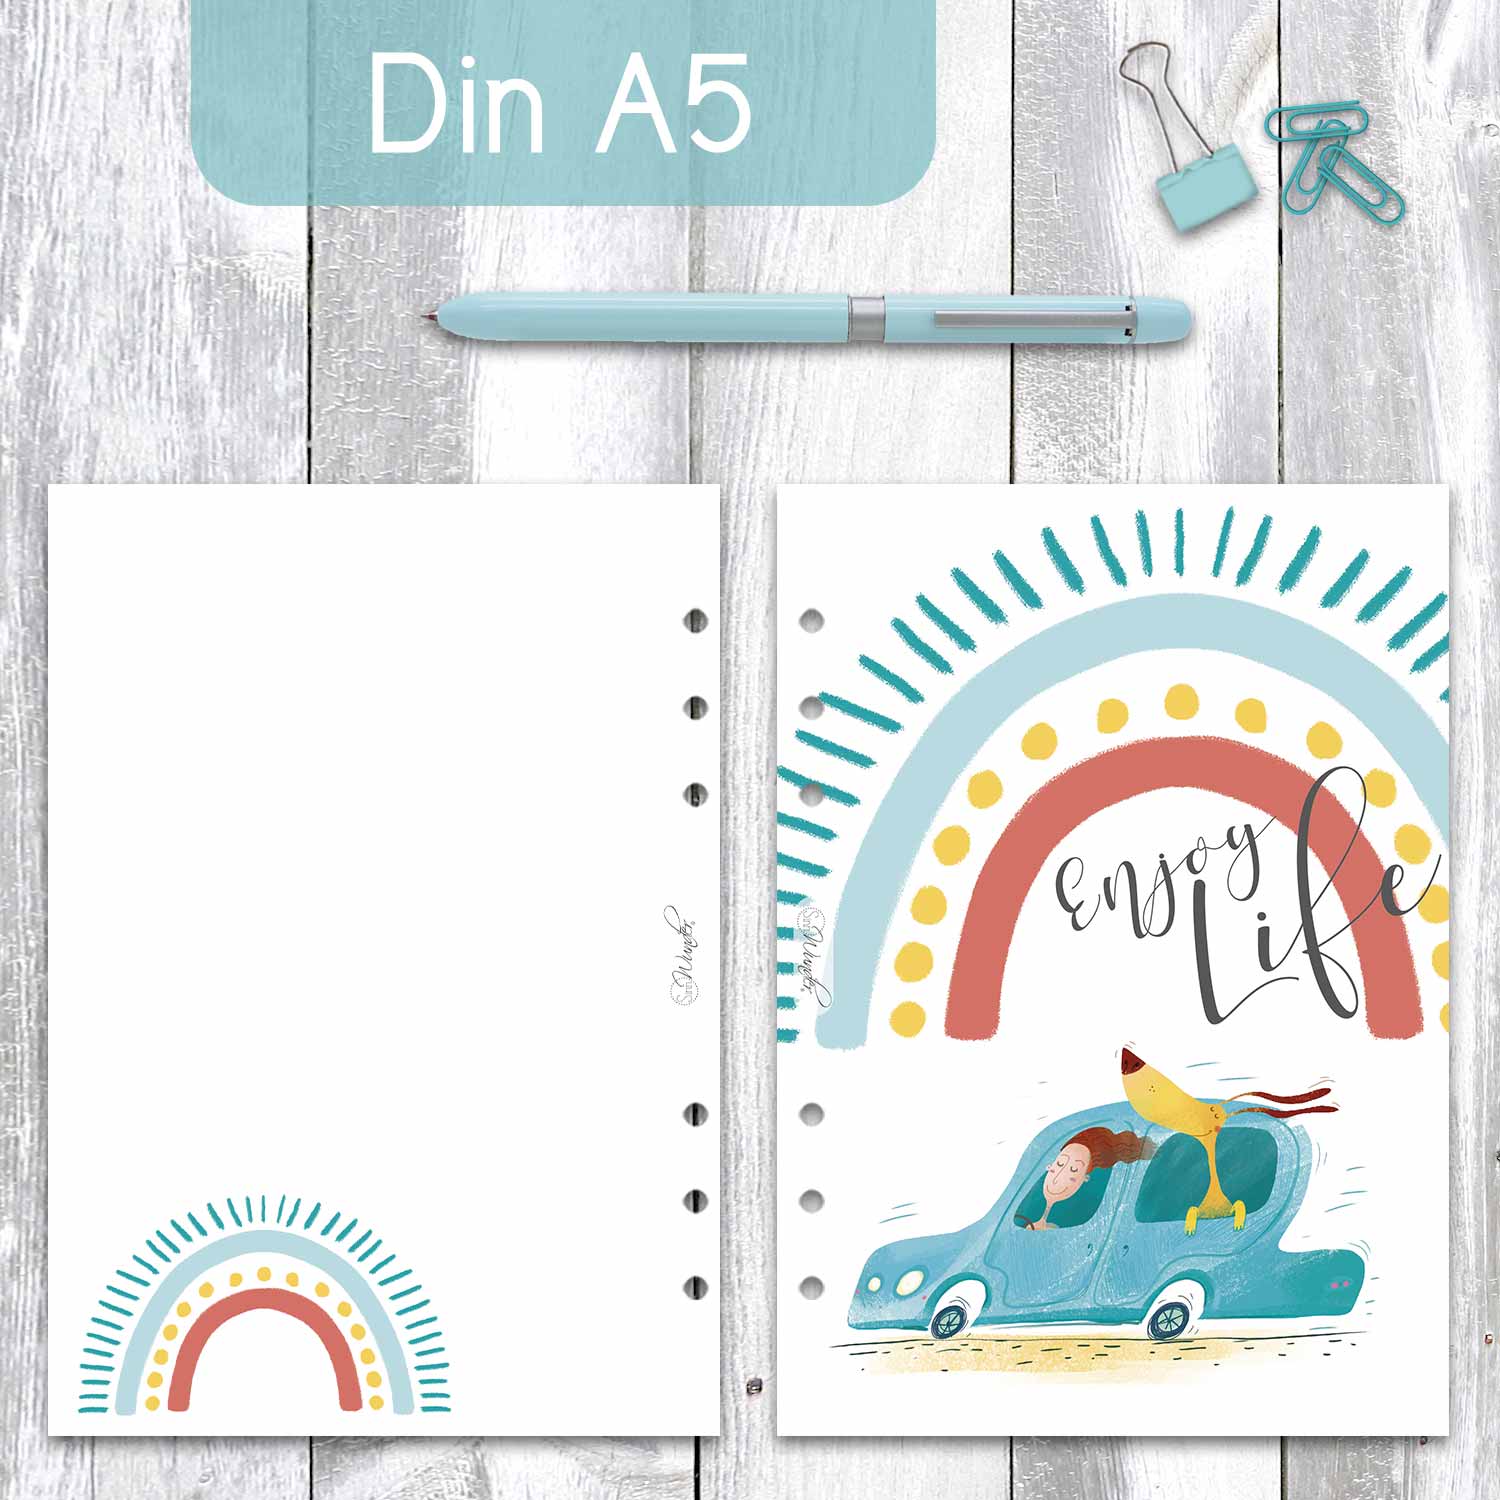 SinnWunder Planer-Dashboards (Deckblätter) Din A5 "Enjoy Life"